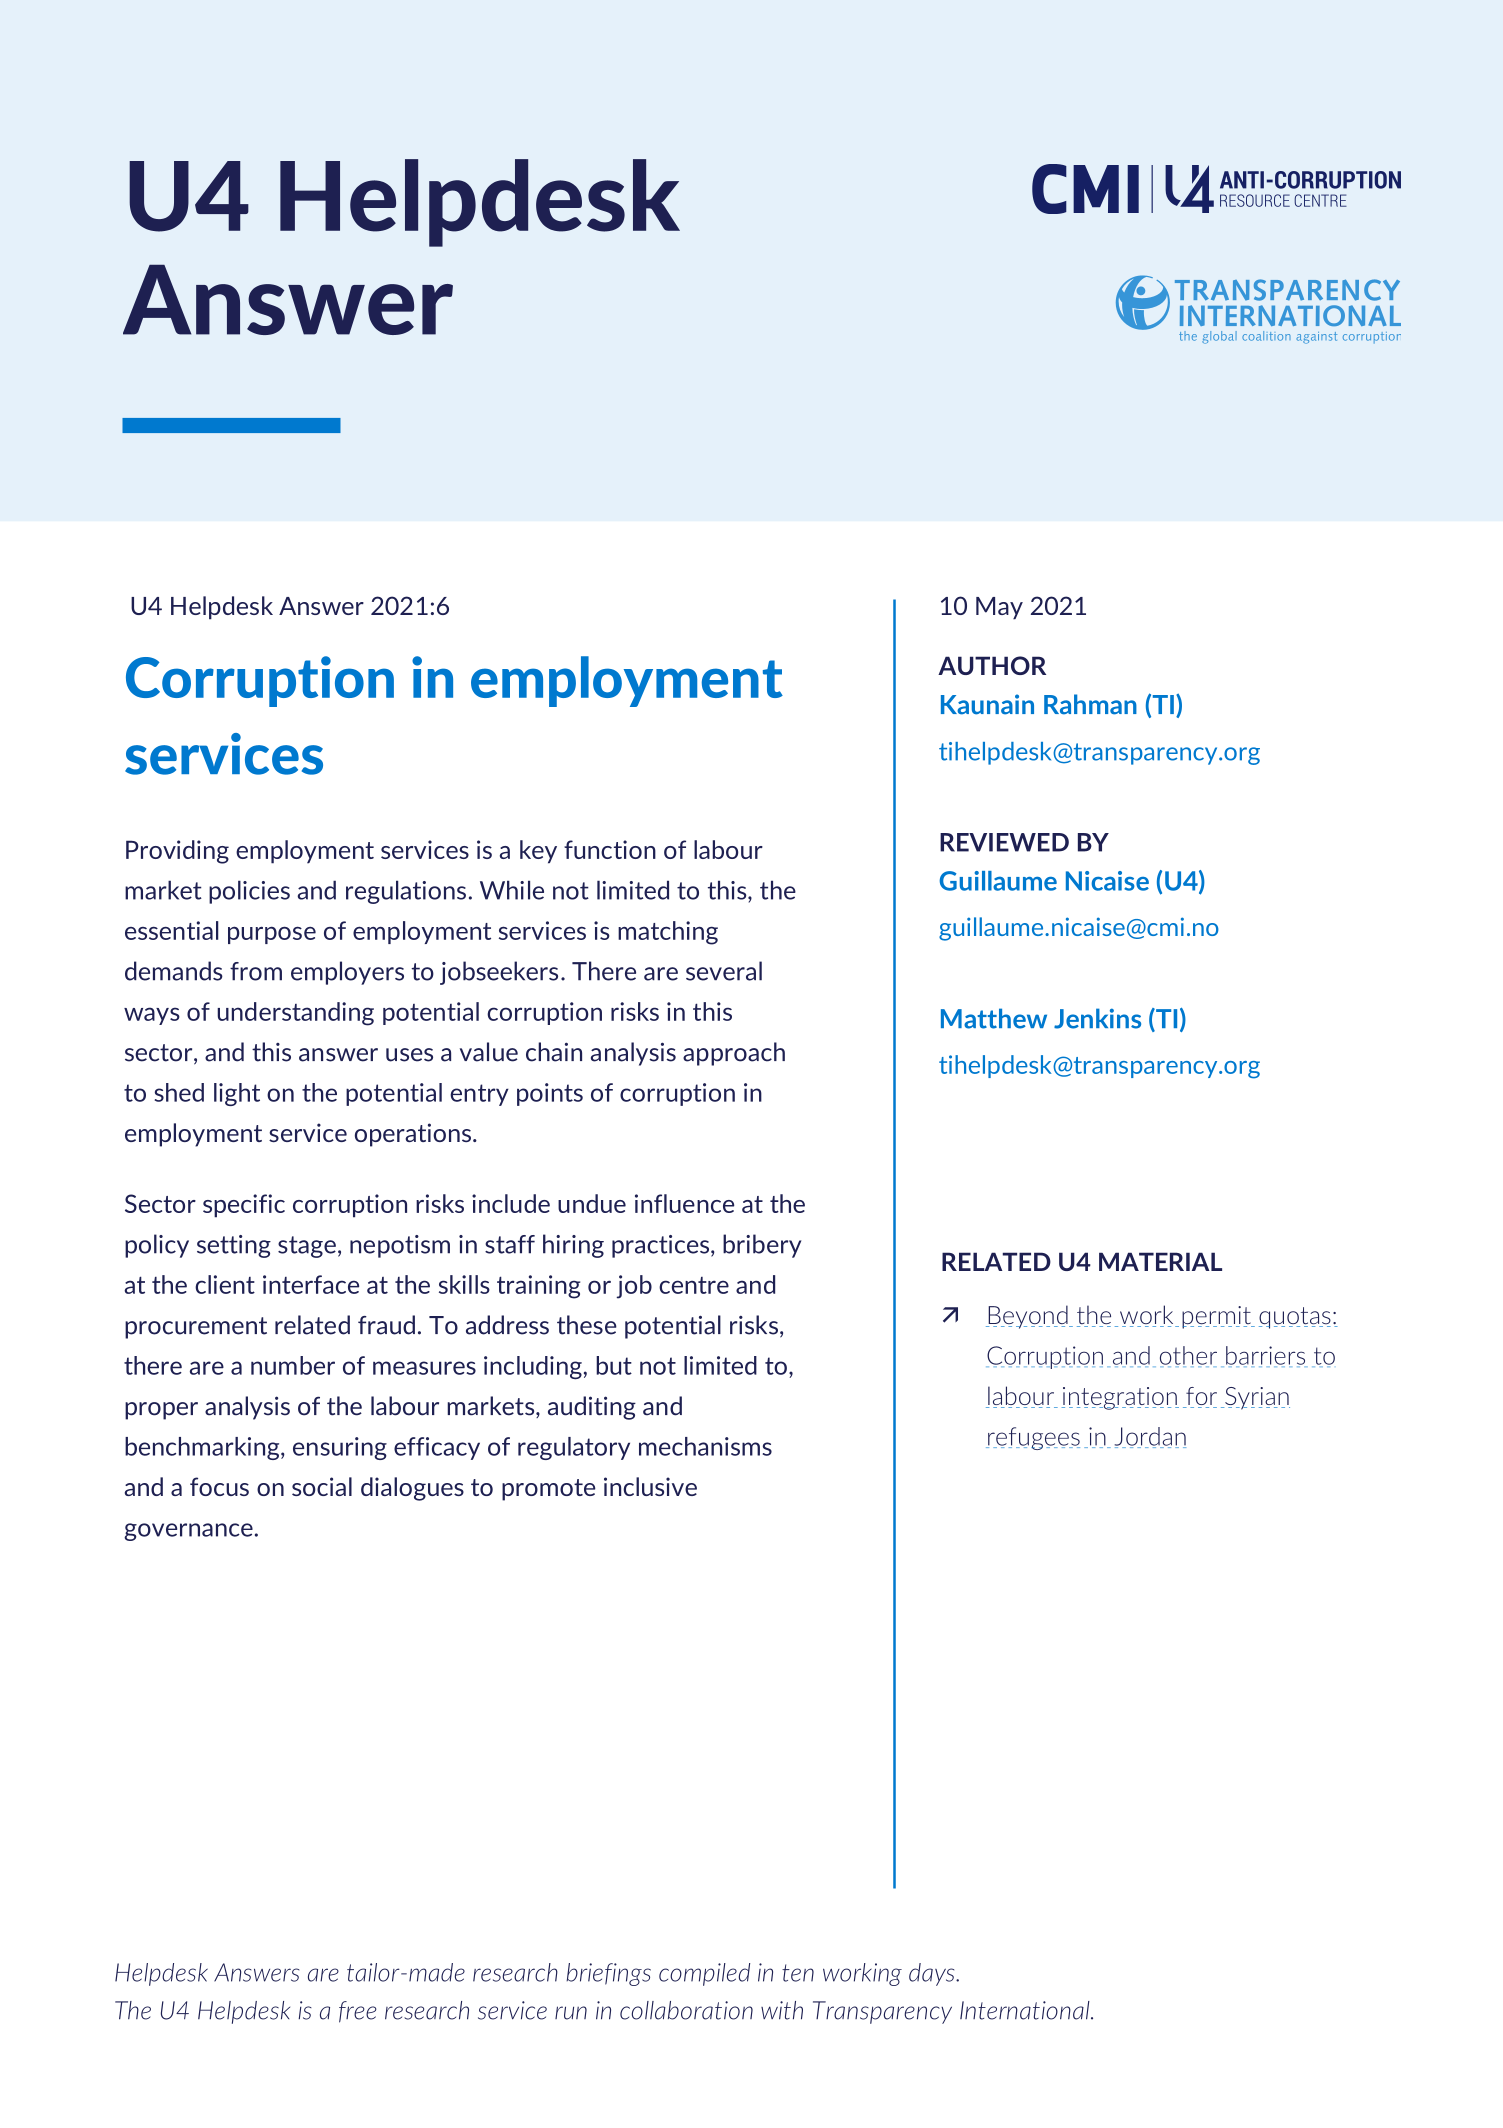 Corruption in employment services